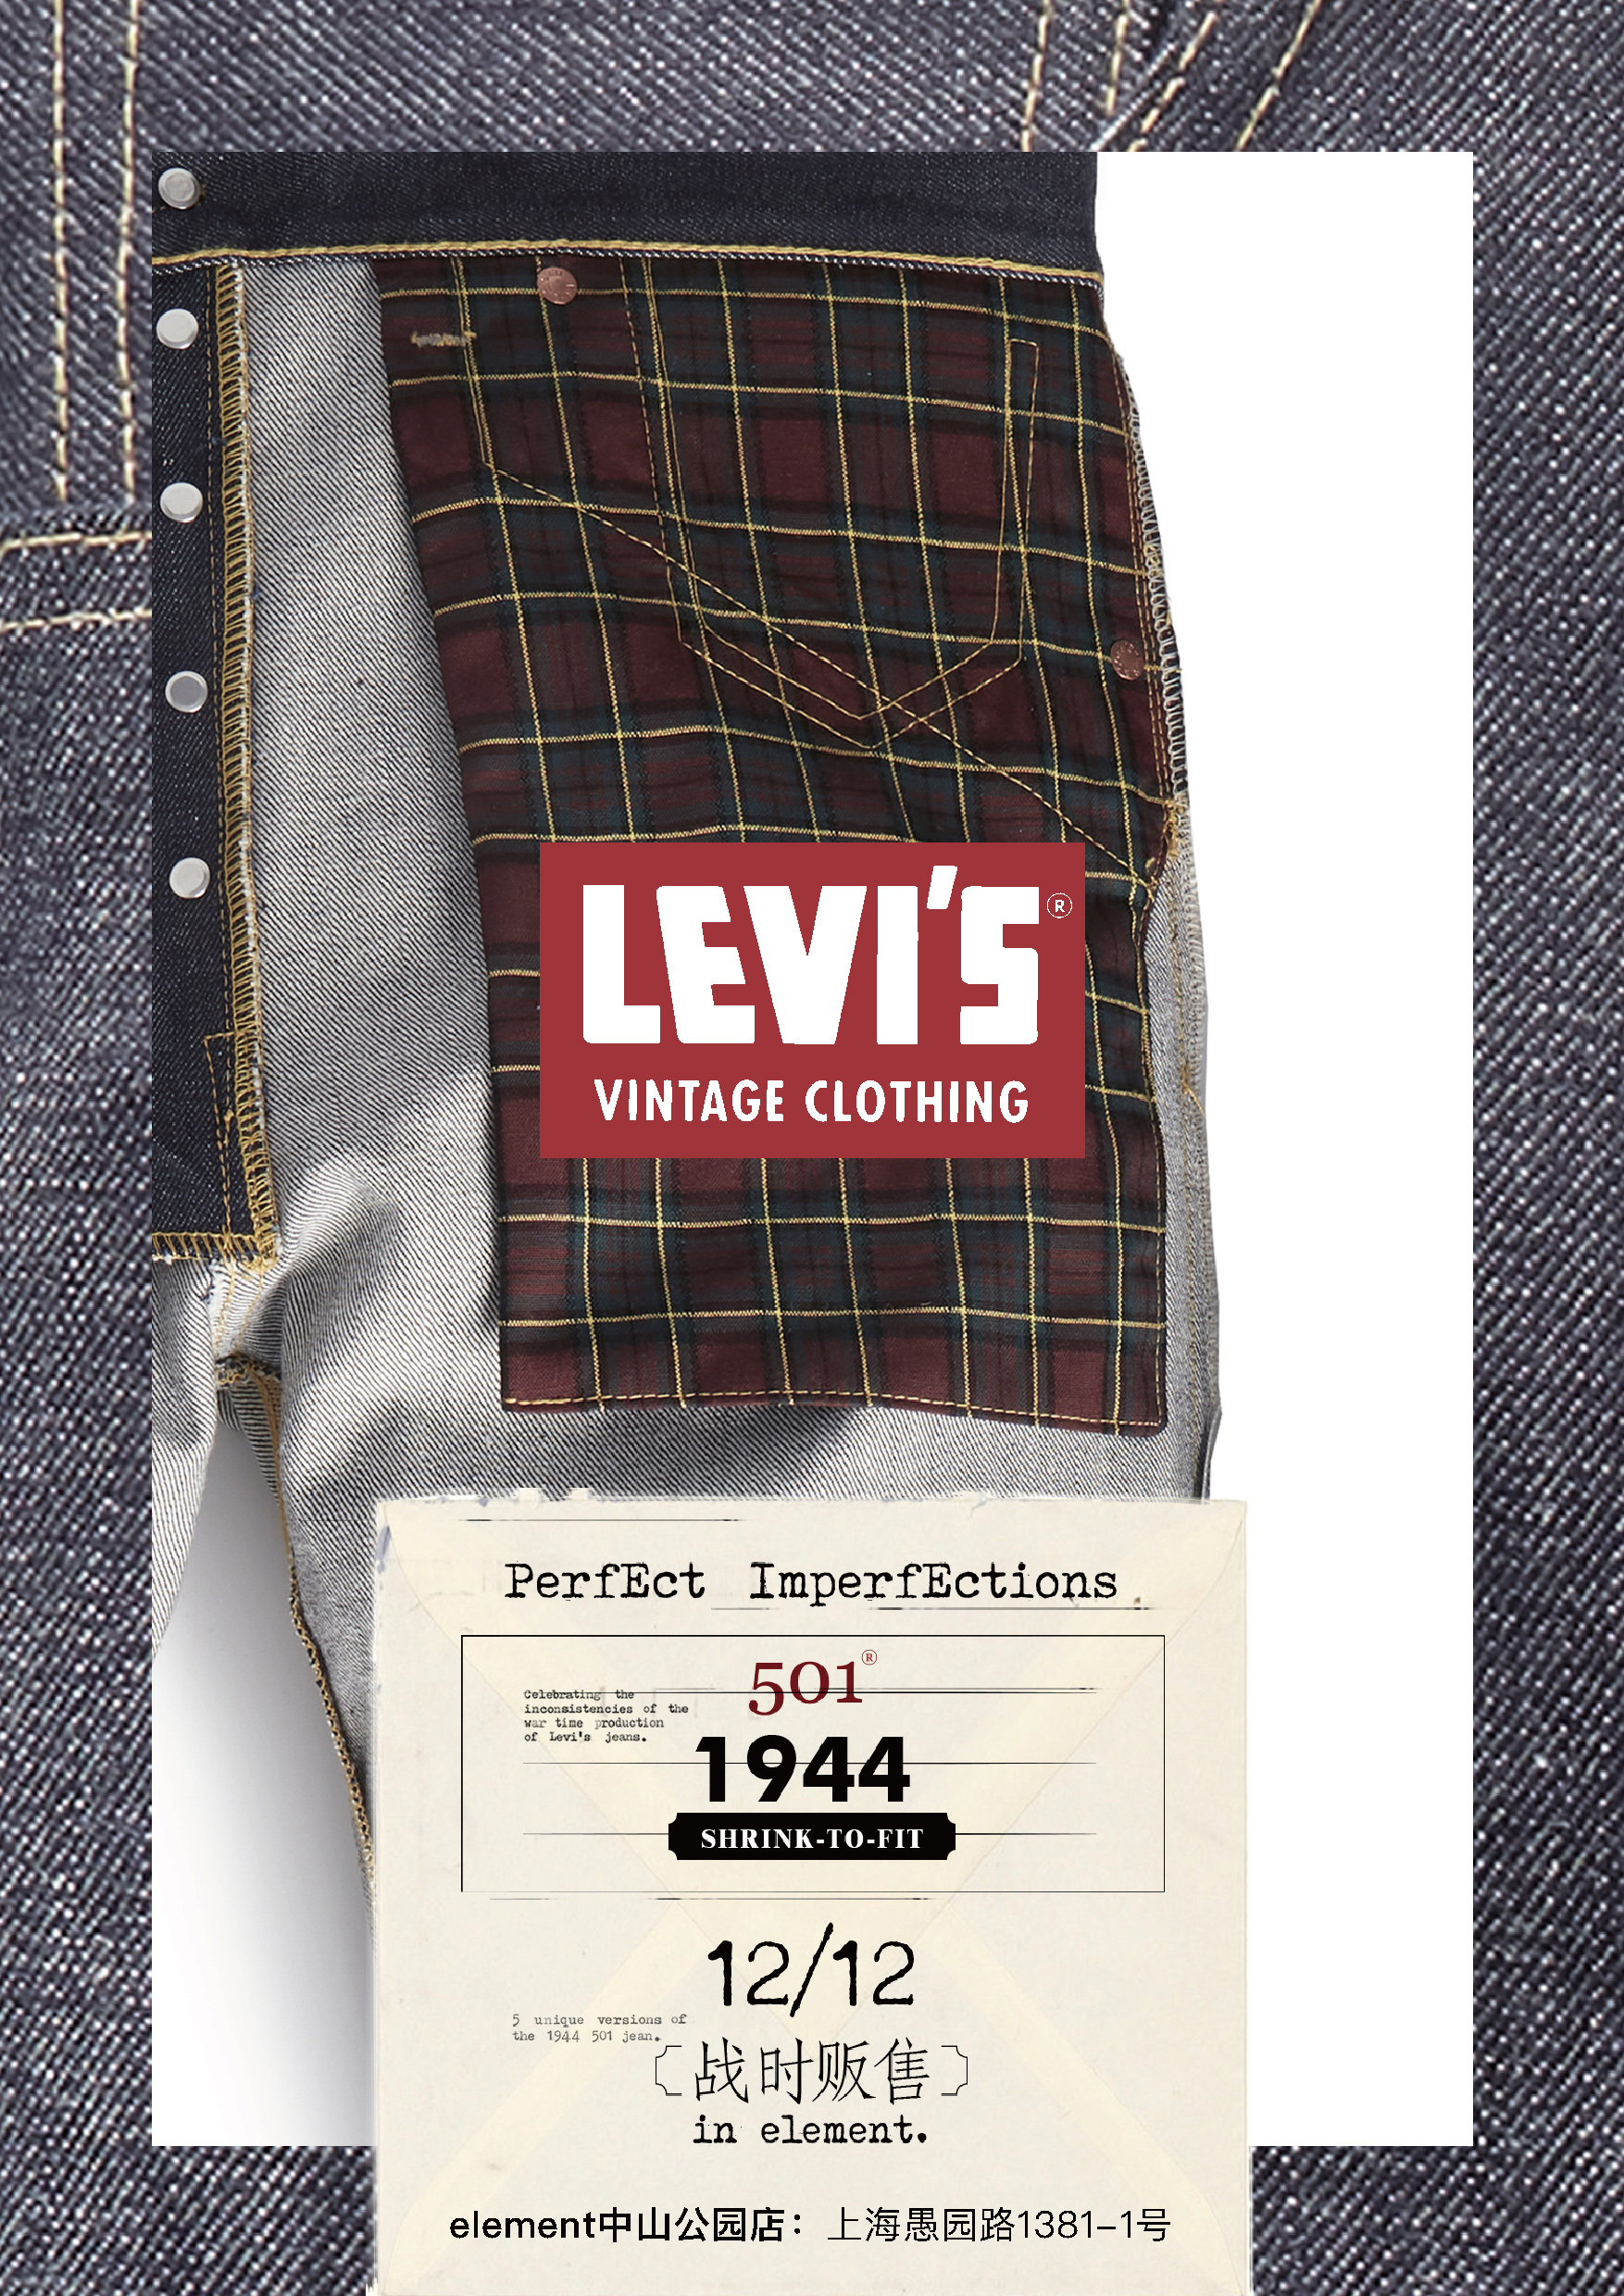 LEVI'S® VINTAGE CLOTHING 最新限量系列「Perfect Imperfection」即将于沪上生活潮流集合店element  独家发售– NOWRE现客